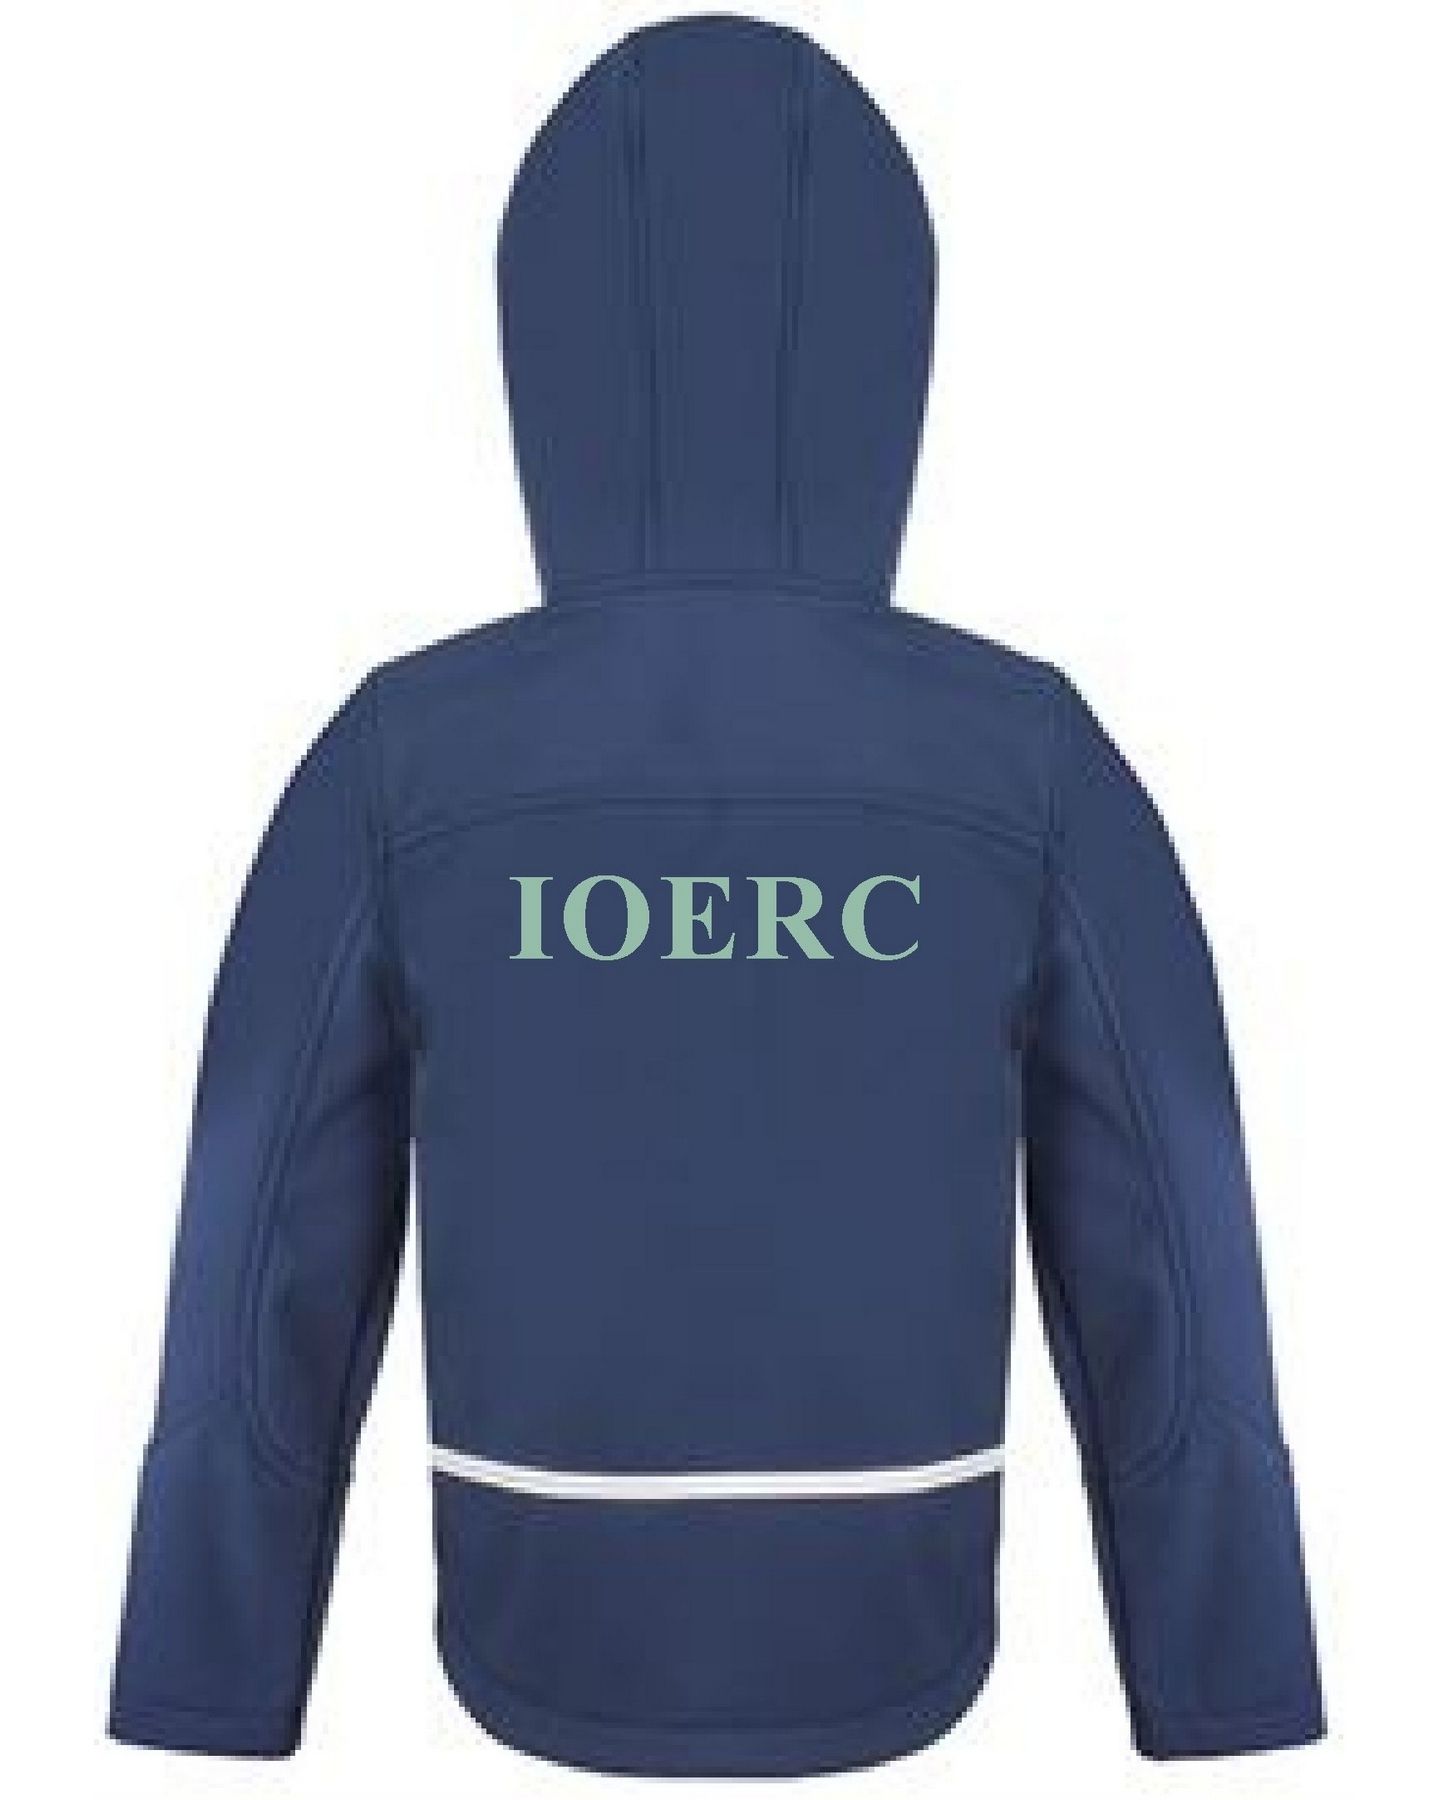 IOERC – Softshell Jacket (Kids)